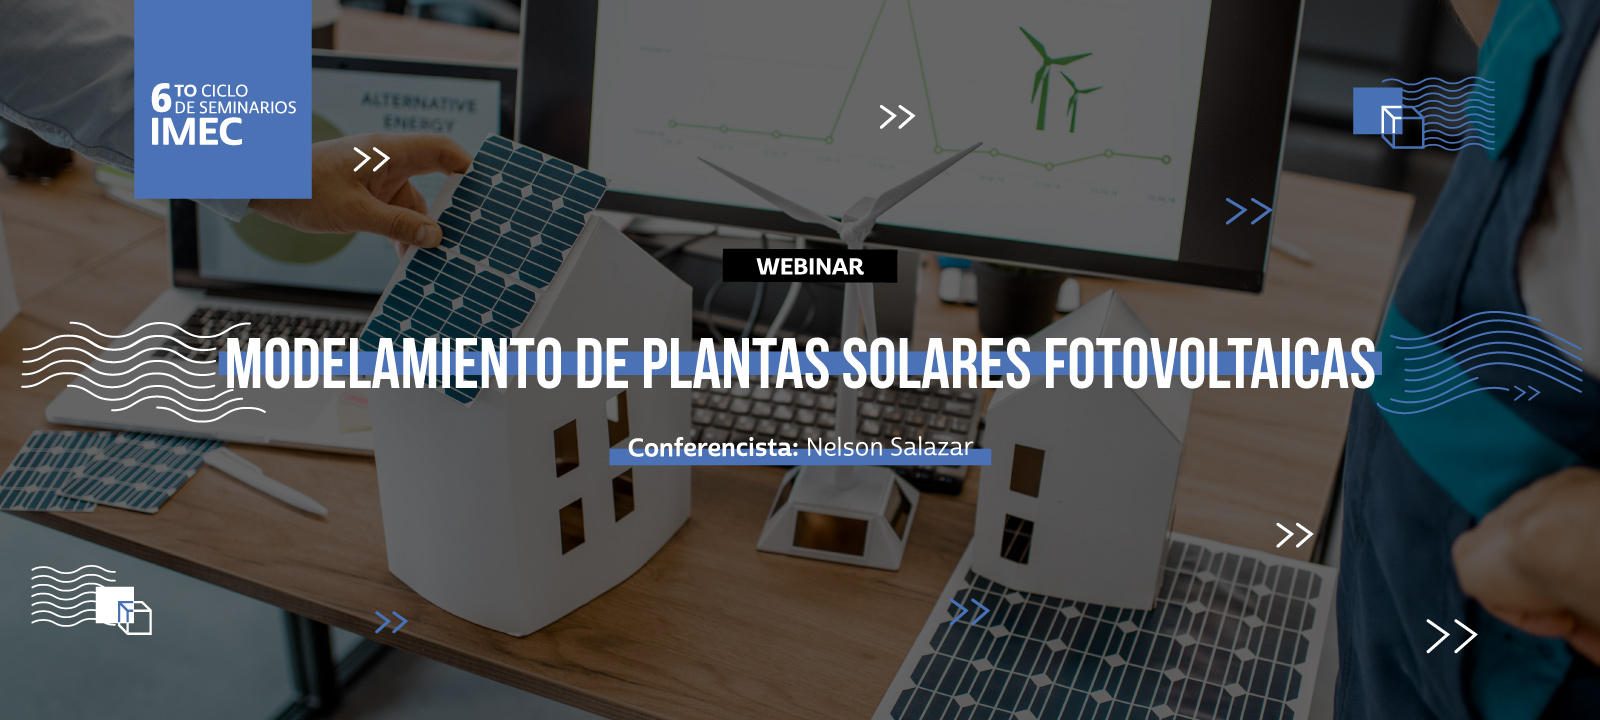 Modelamiento de plantas solares fotovoltaicas 